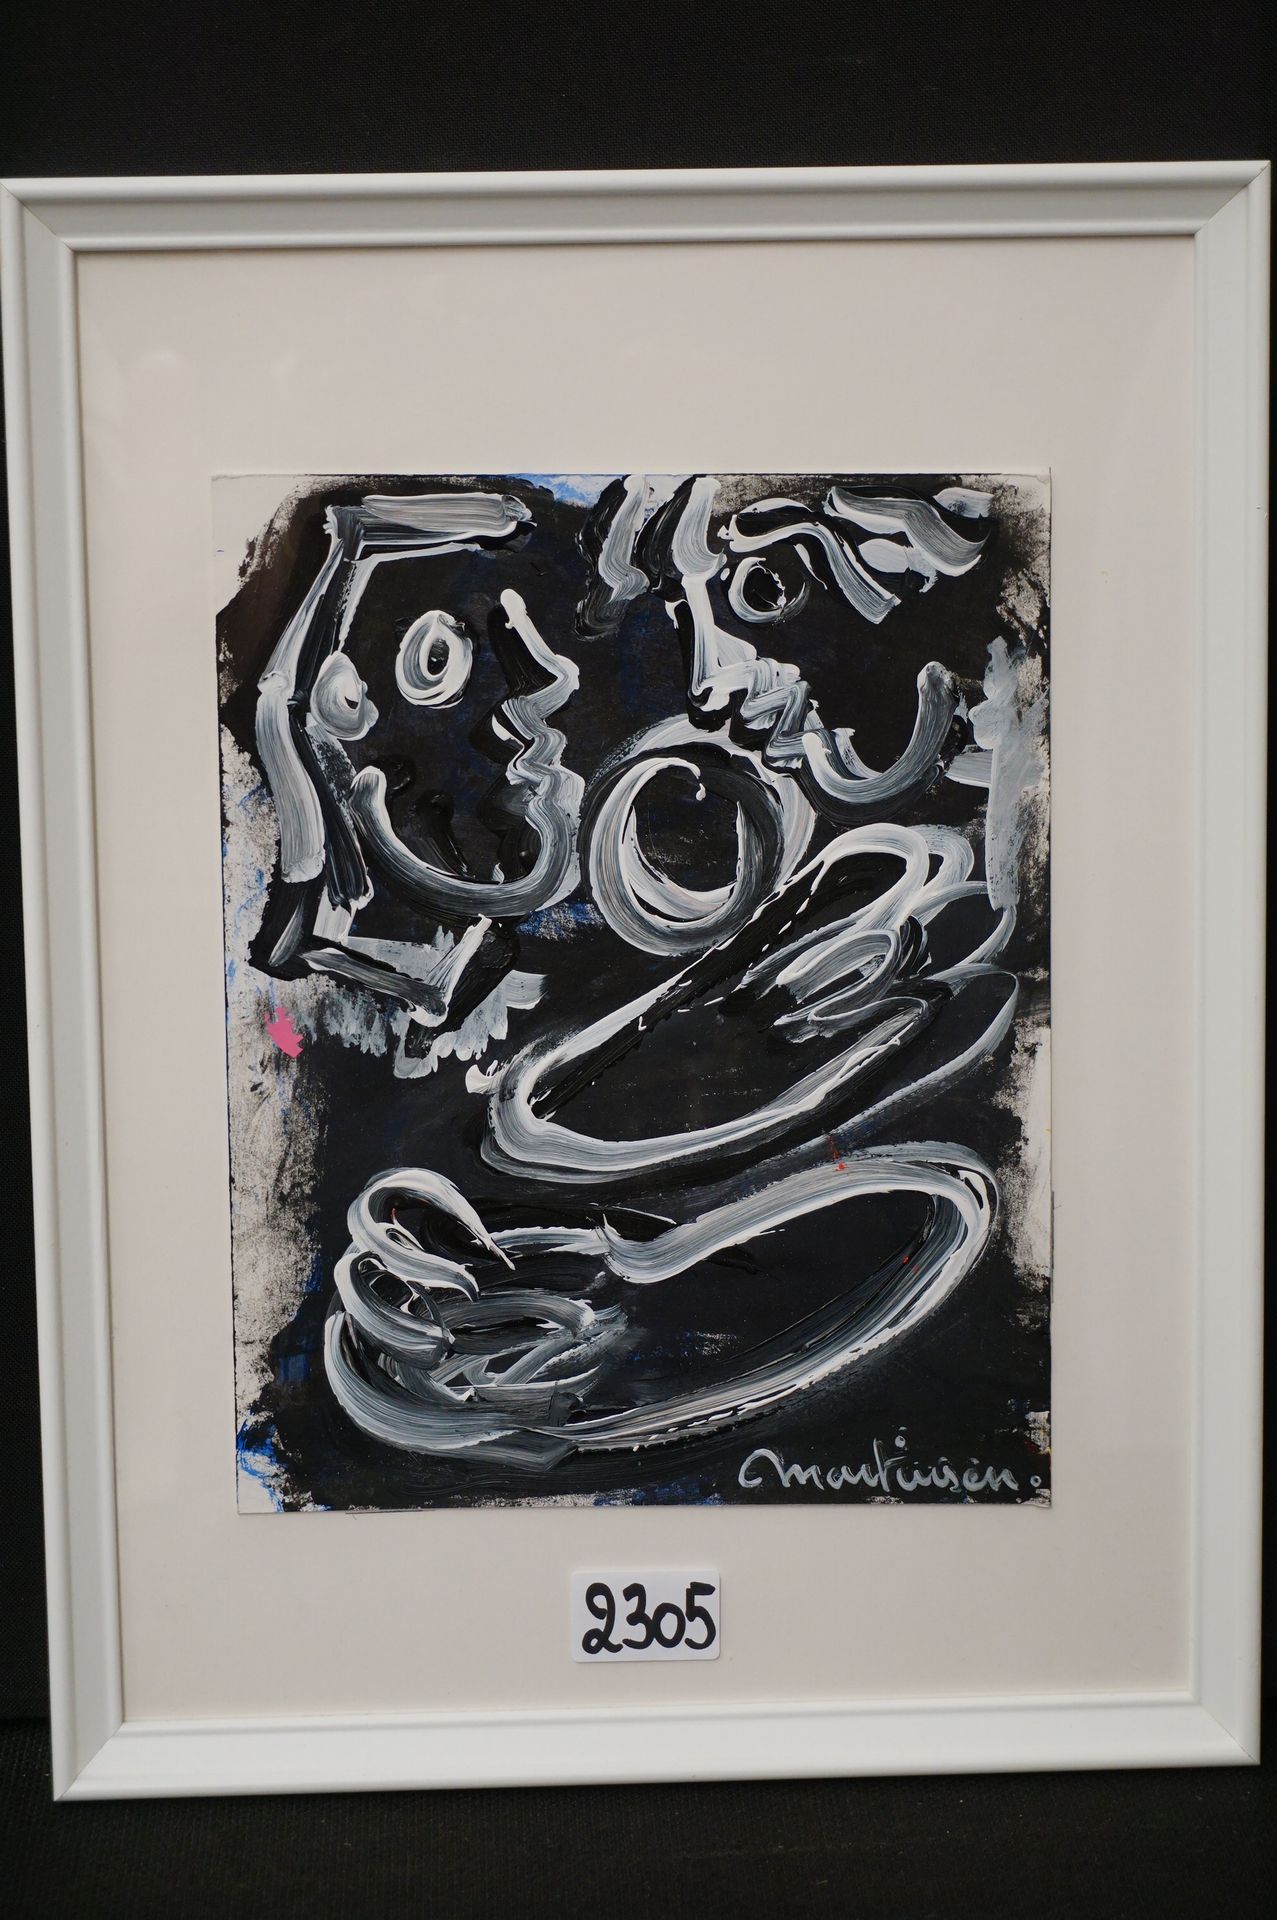 LUC MARTINSEN (1951 - ) "现代构成" - 丙烯酸 - 已签名 - 27 x 22 cm